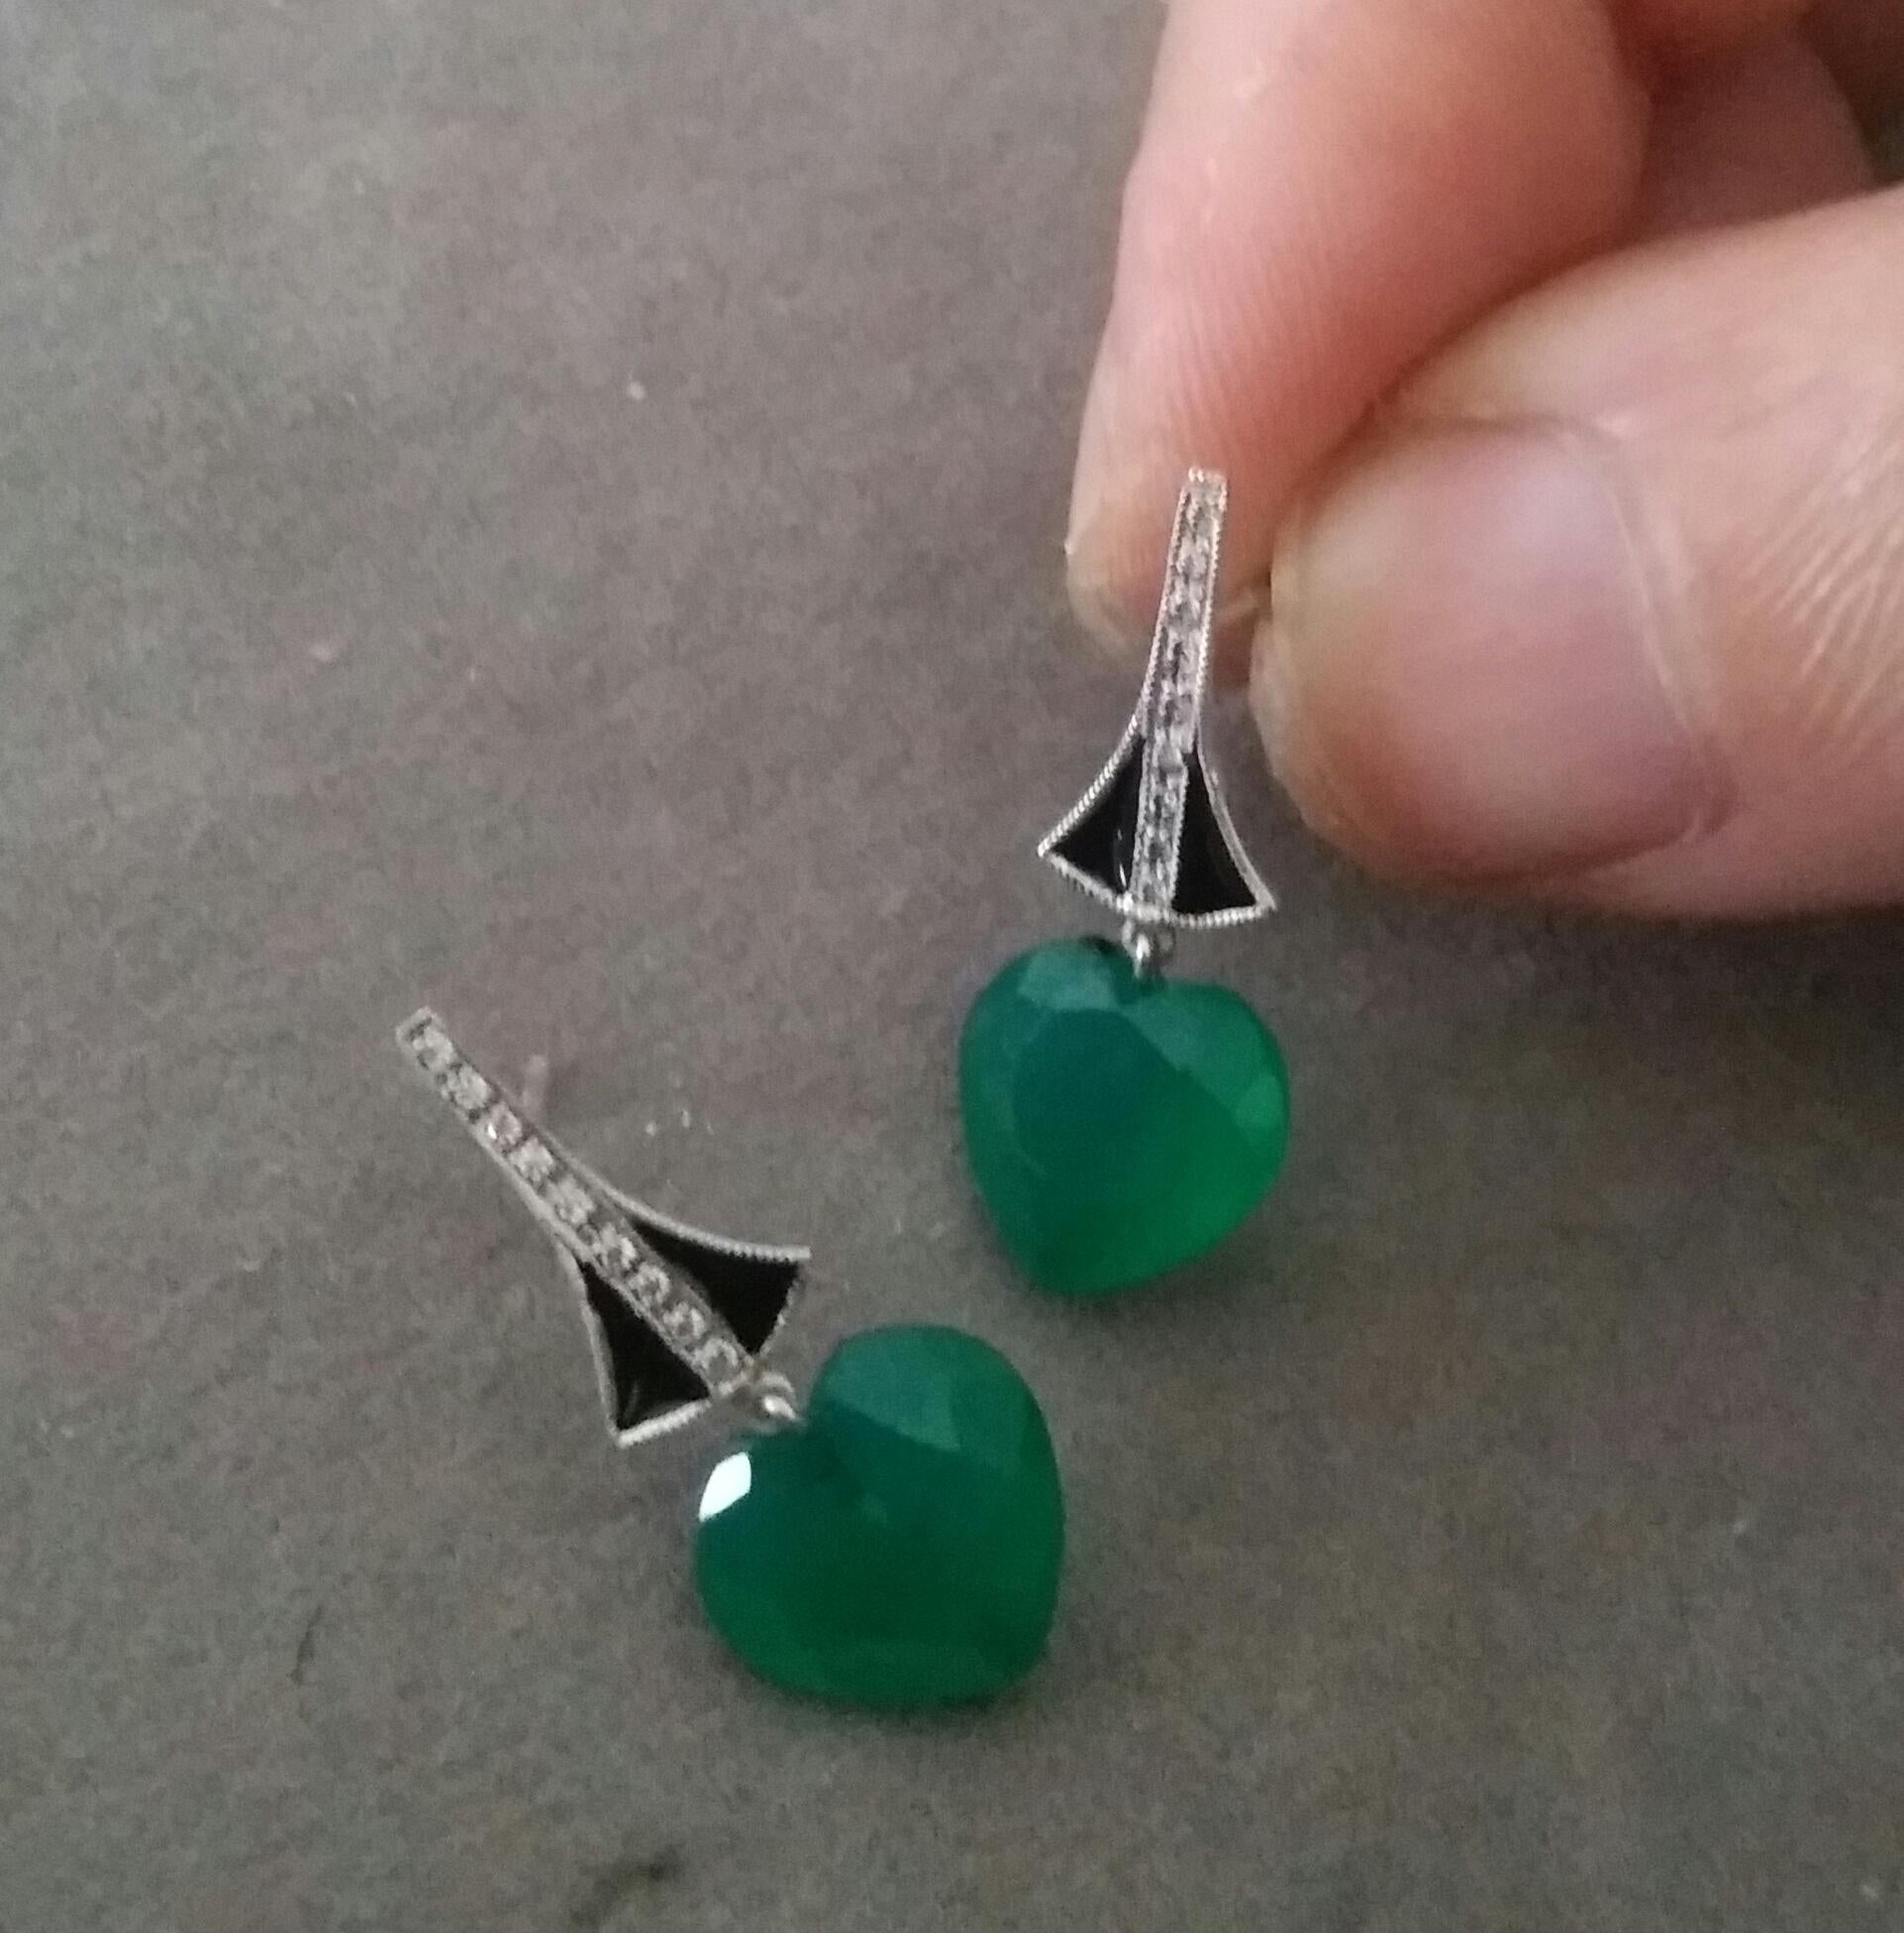 hirajule jewelry earrings